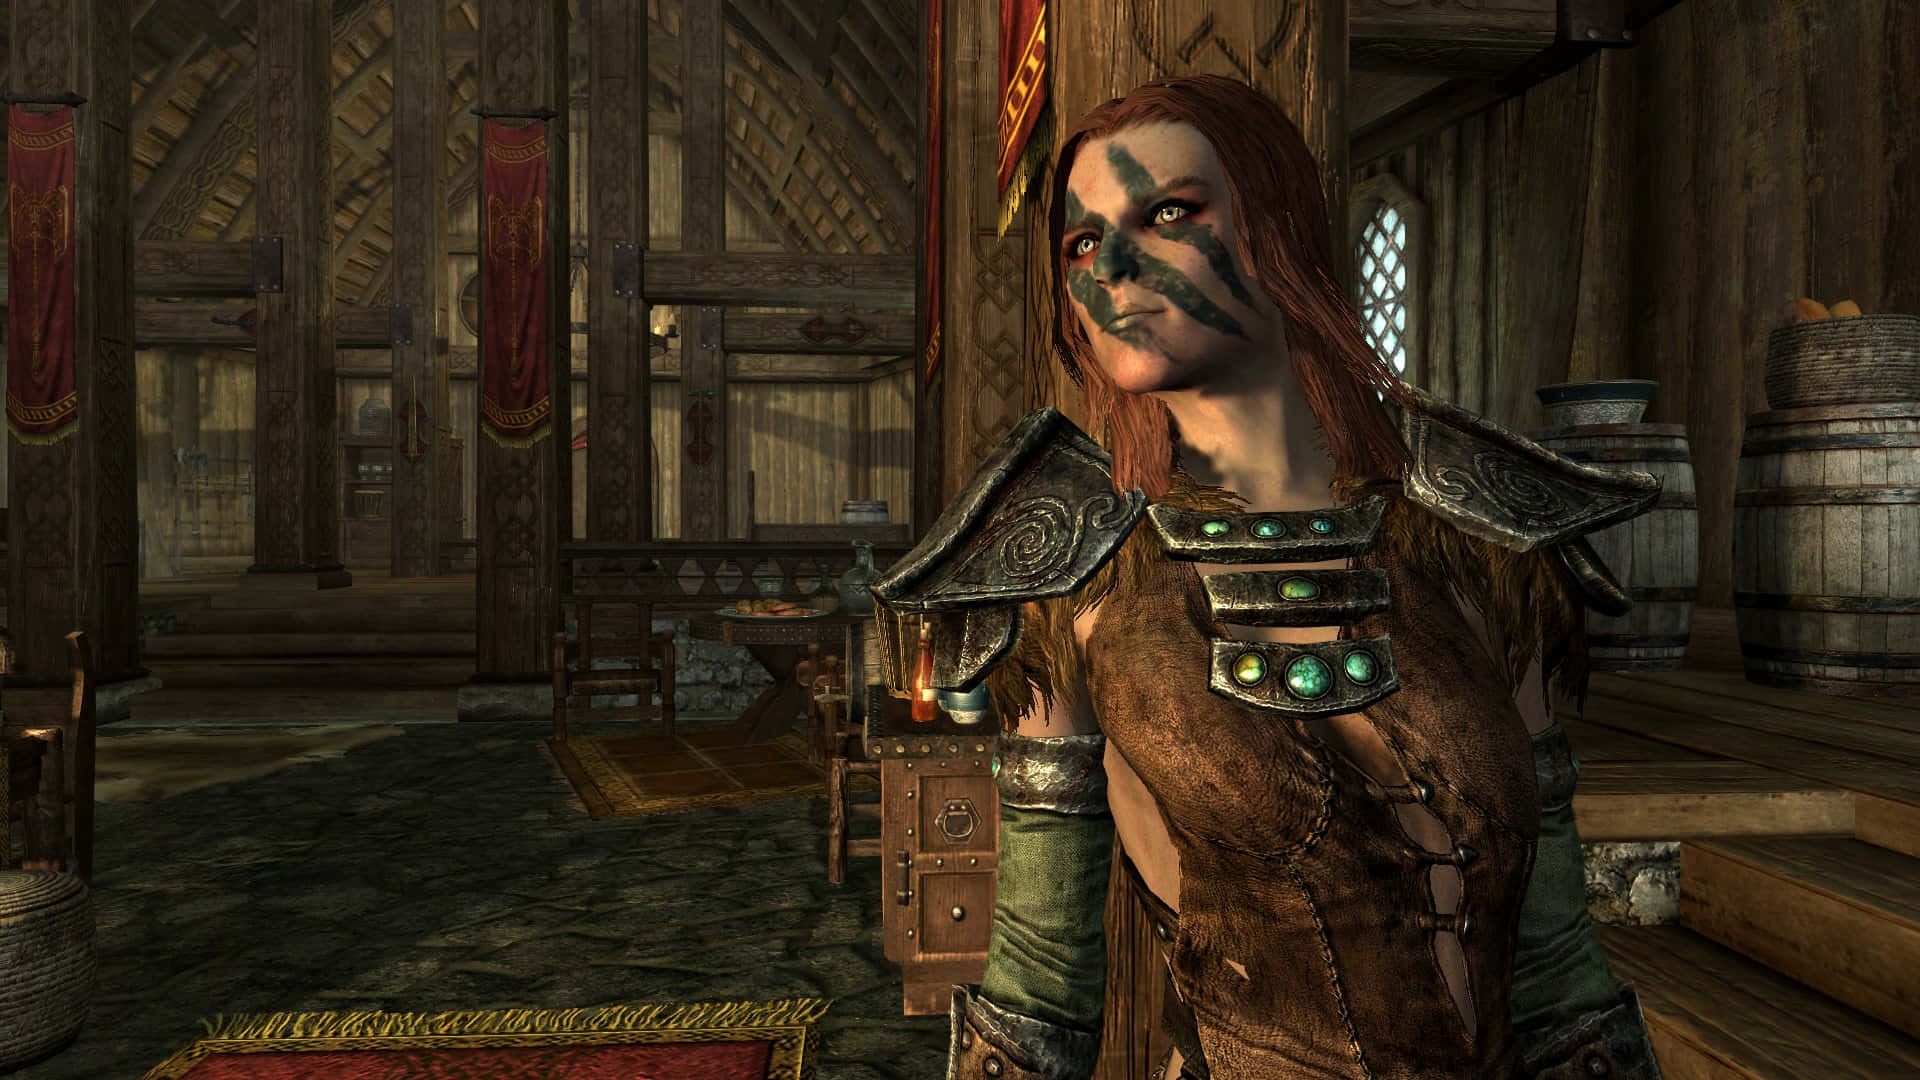 Aela The Huntress in Battle-Ready Pose in Skyrim Wallpaper